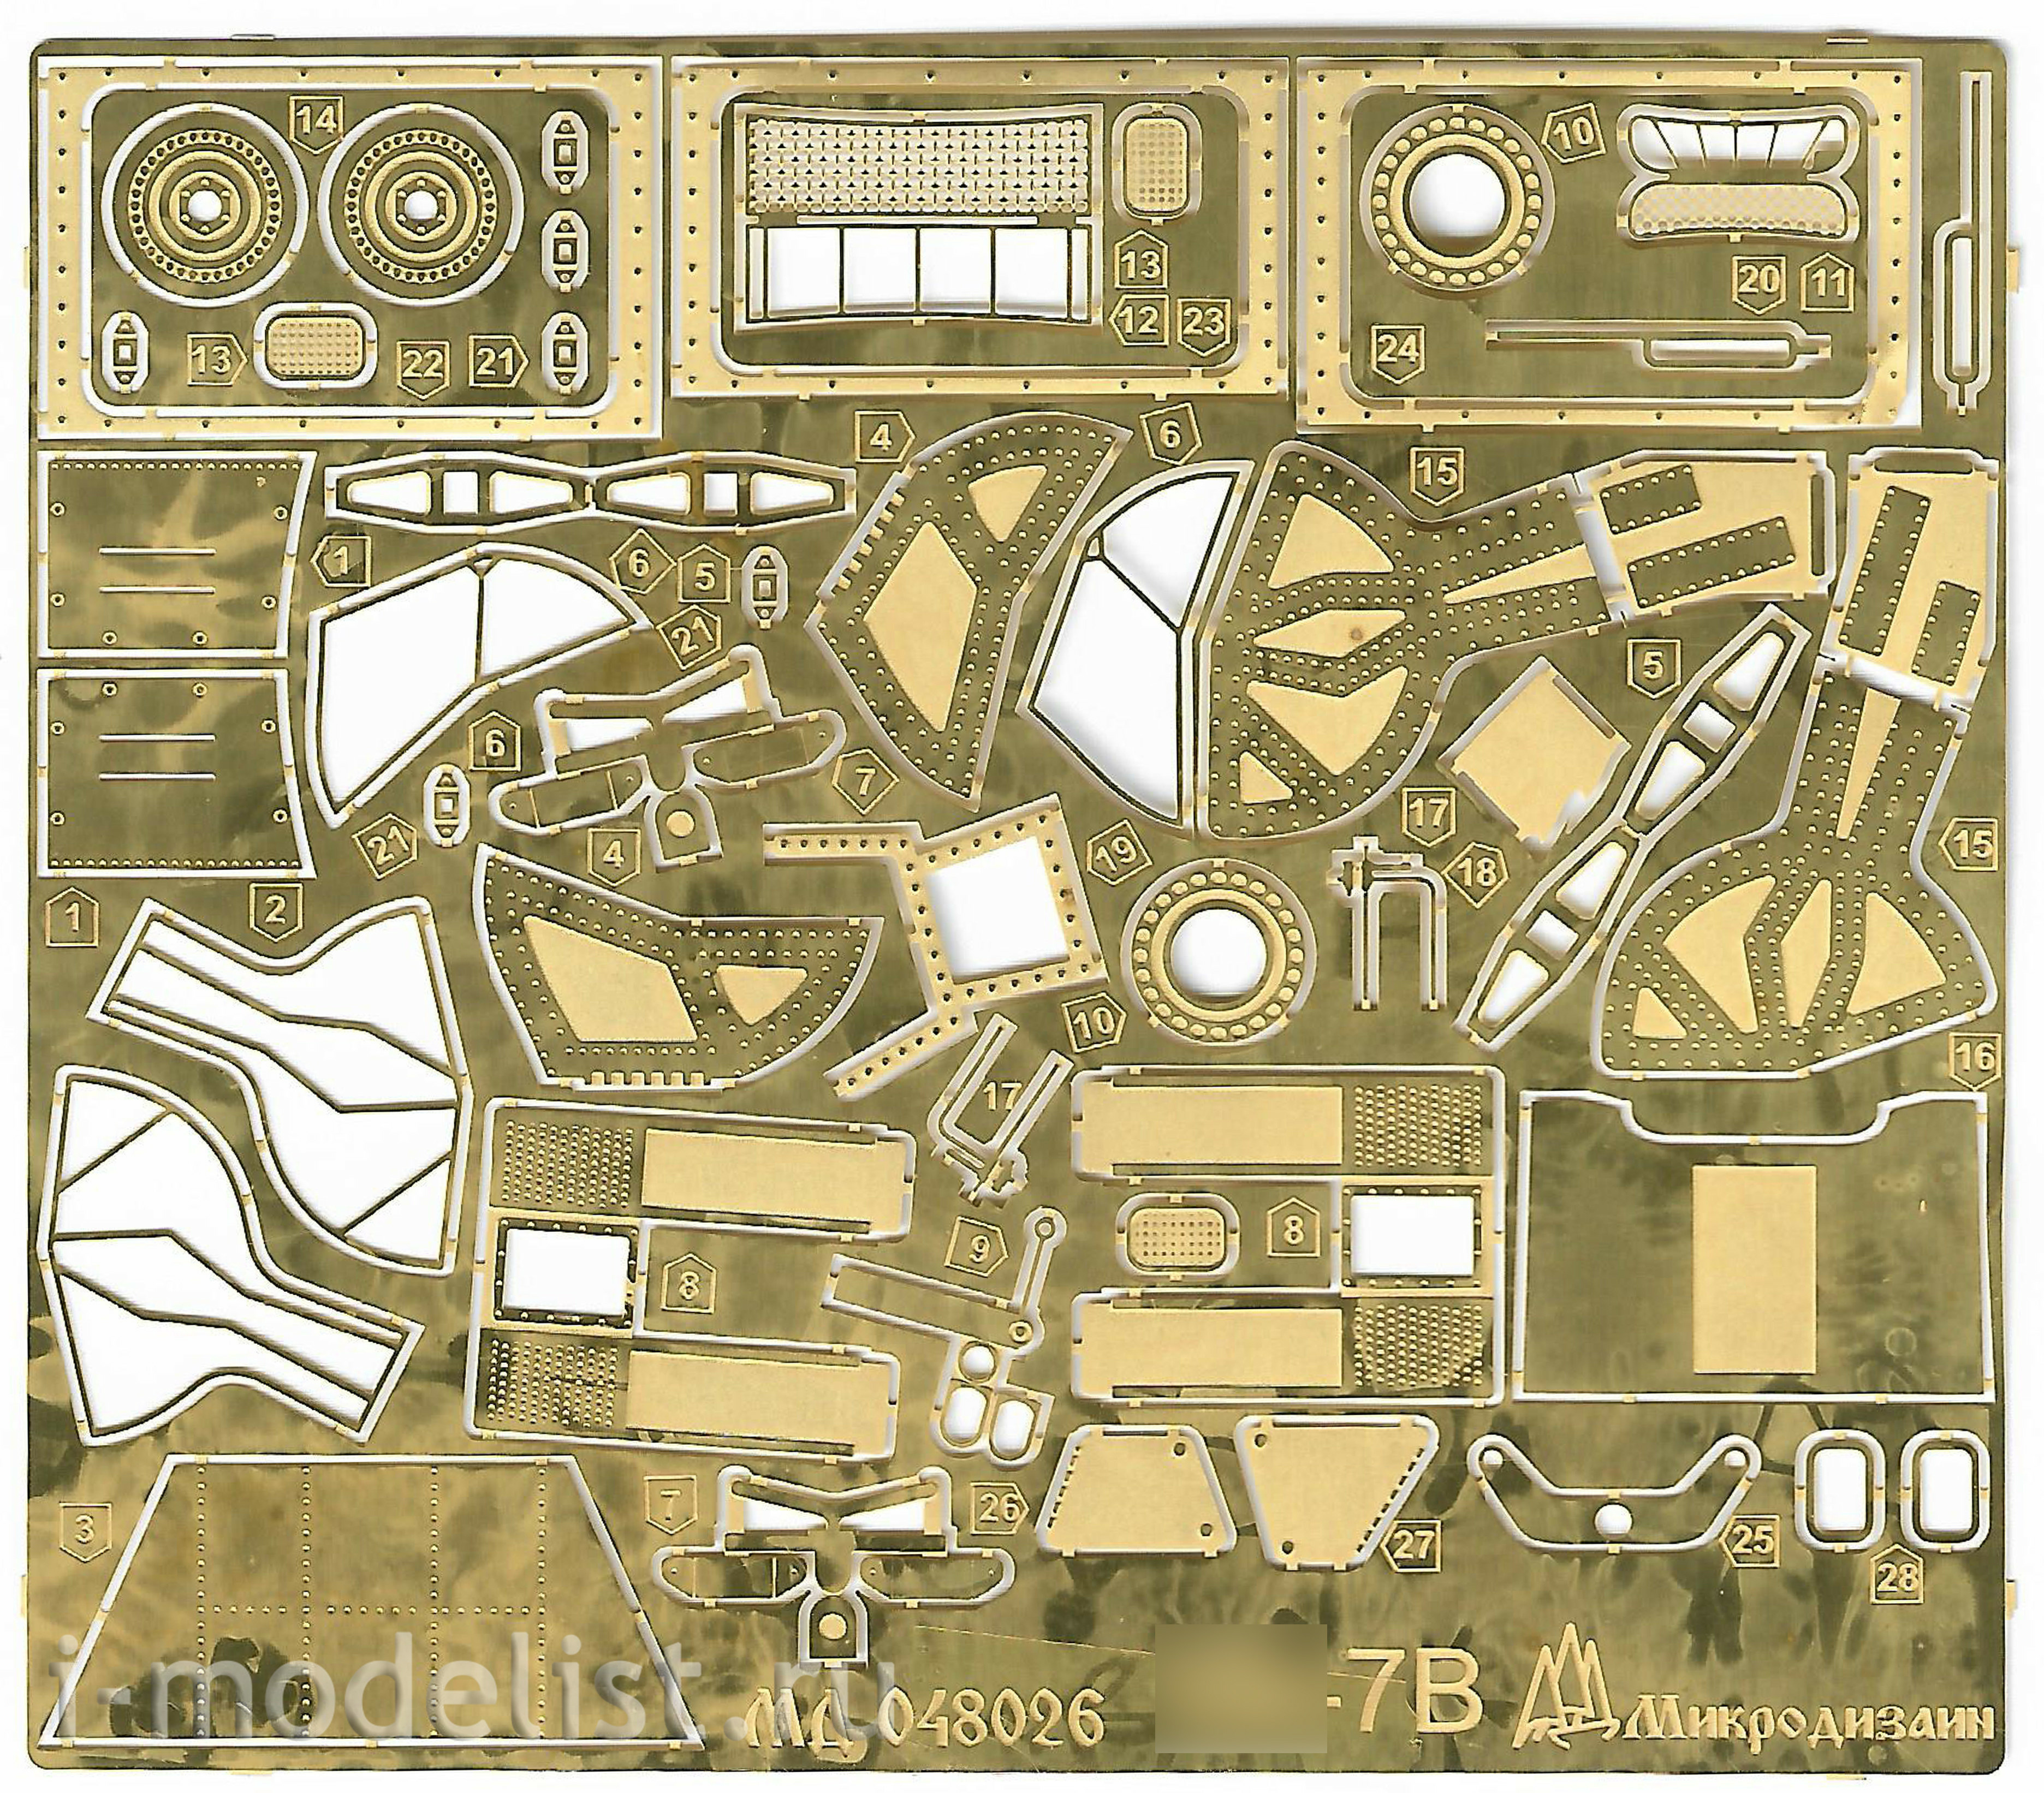 048027 Microdesign 1/48 Color dashboards Yak-7B/Yak-7UTI (ICM)